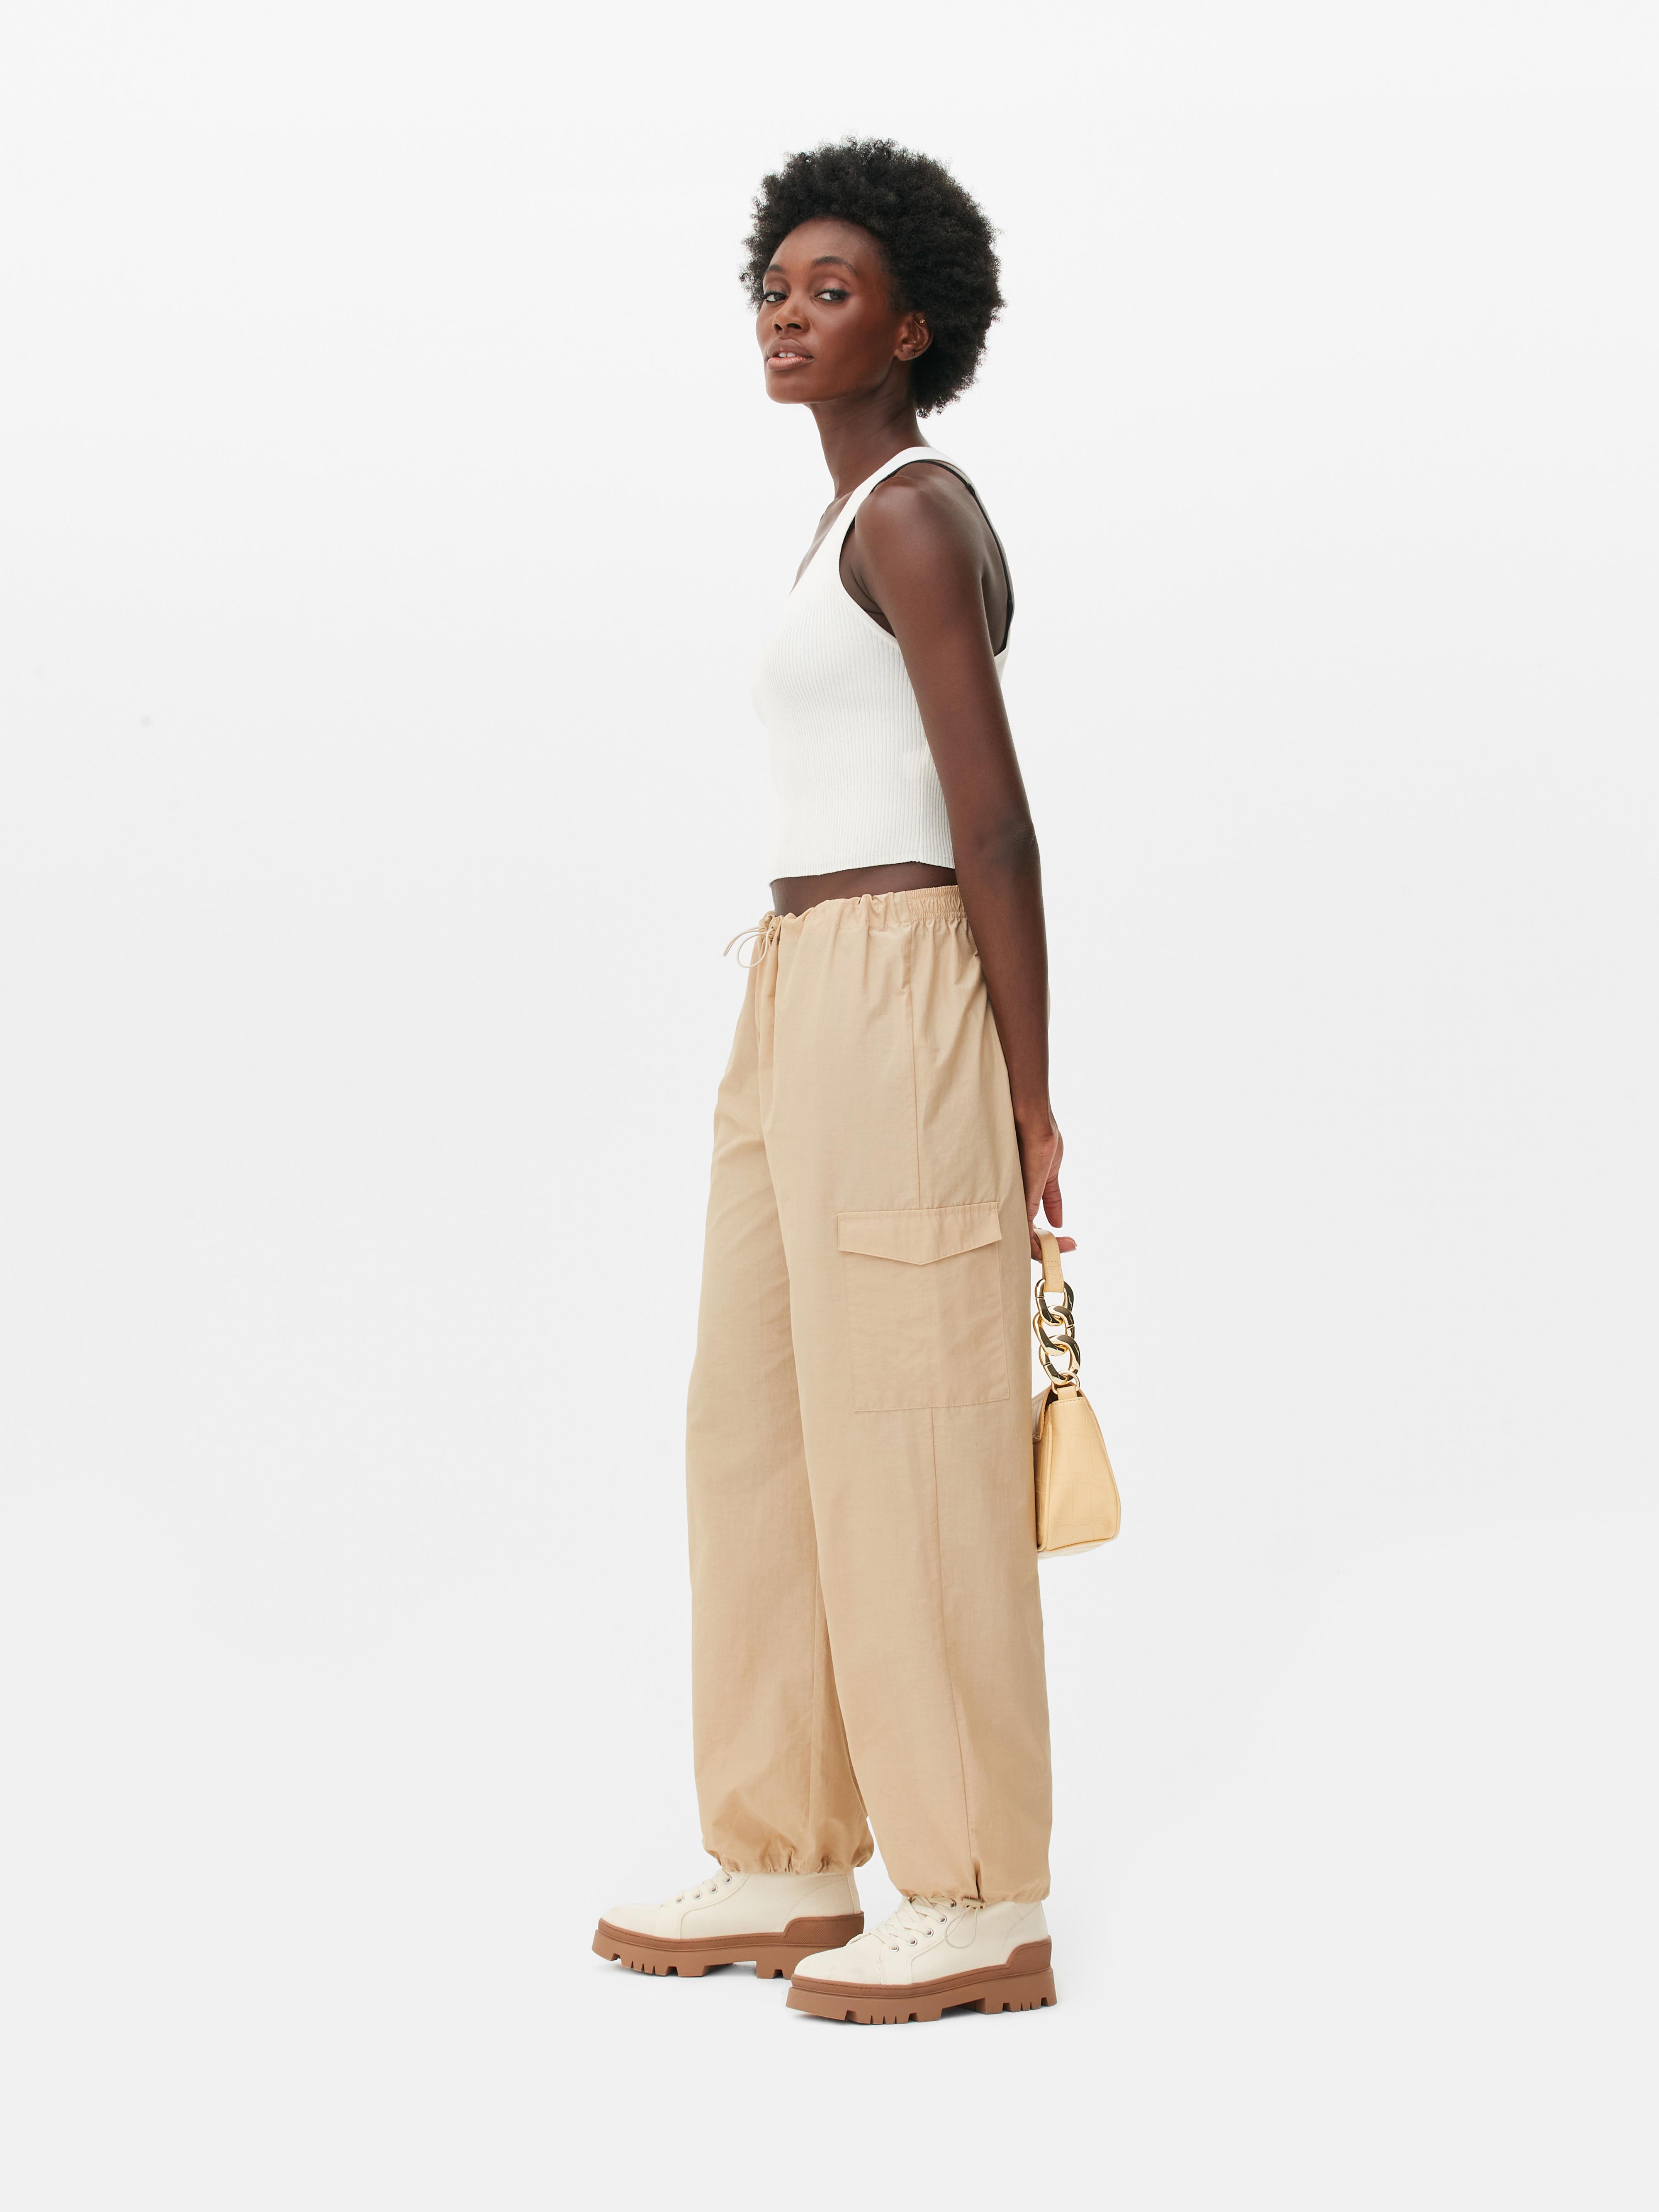 Primark Leggings discount 93% Black S WOMEN FASHION Trousers Leatherette 